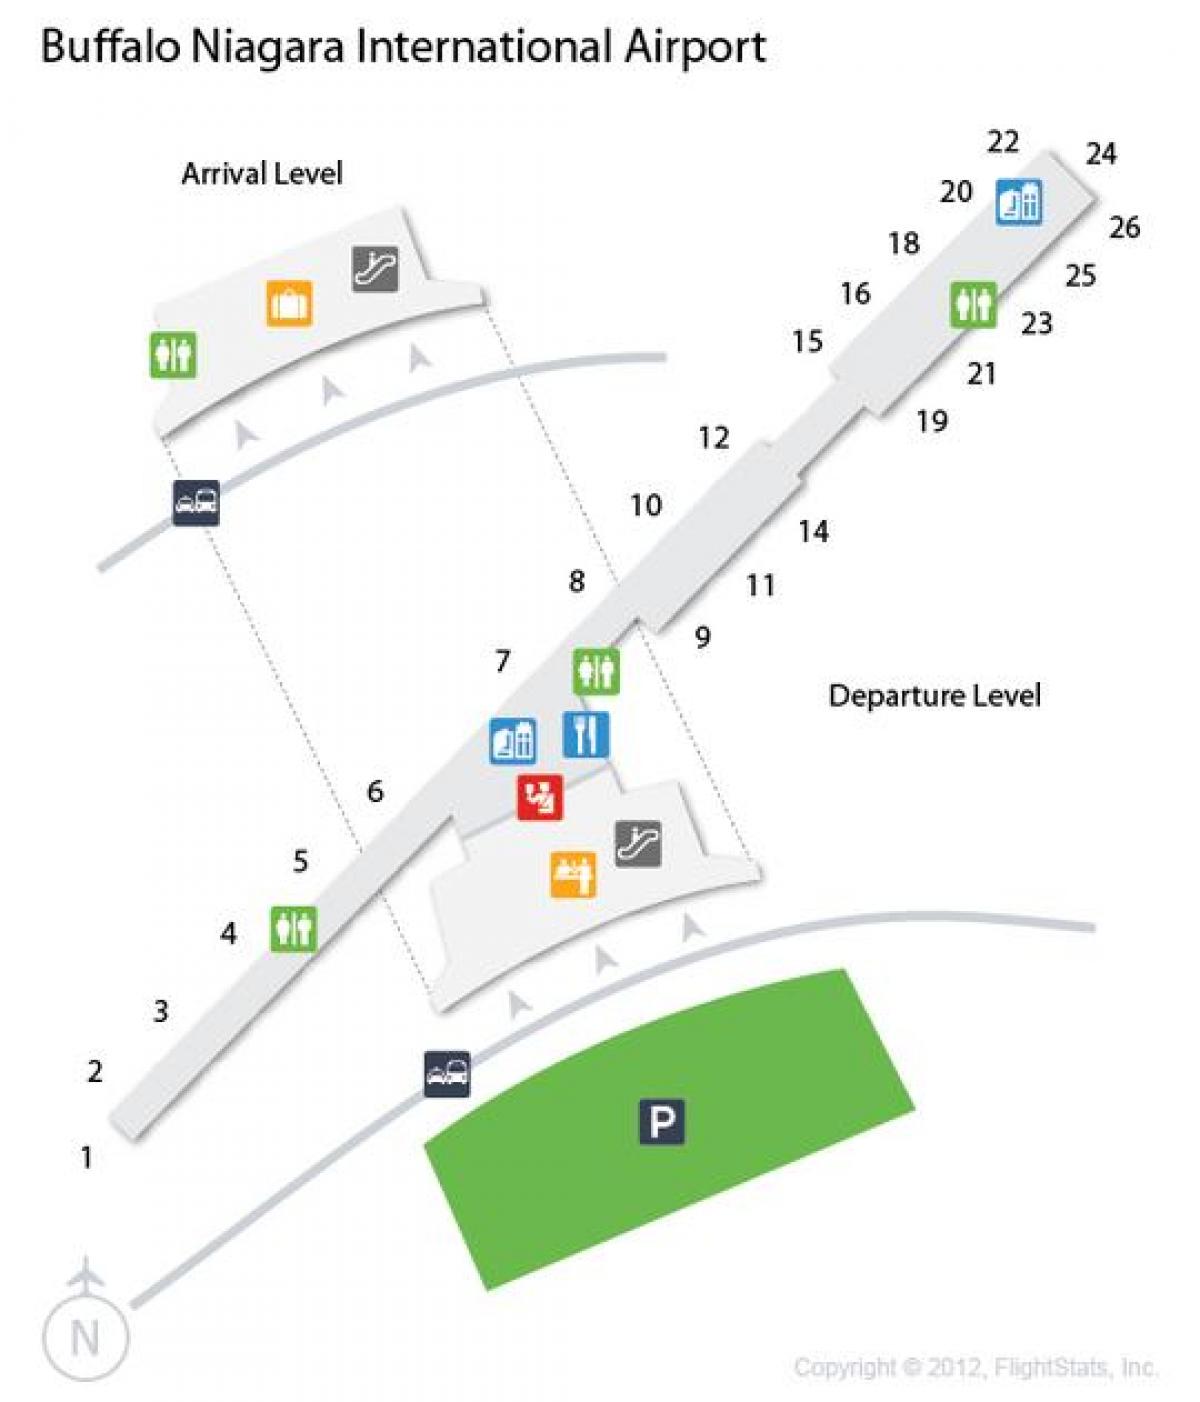 Harta e Buffalo Niagara aeroporti i nisjes nivel